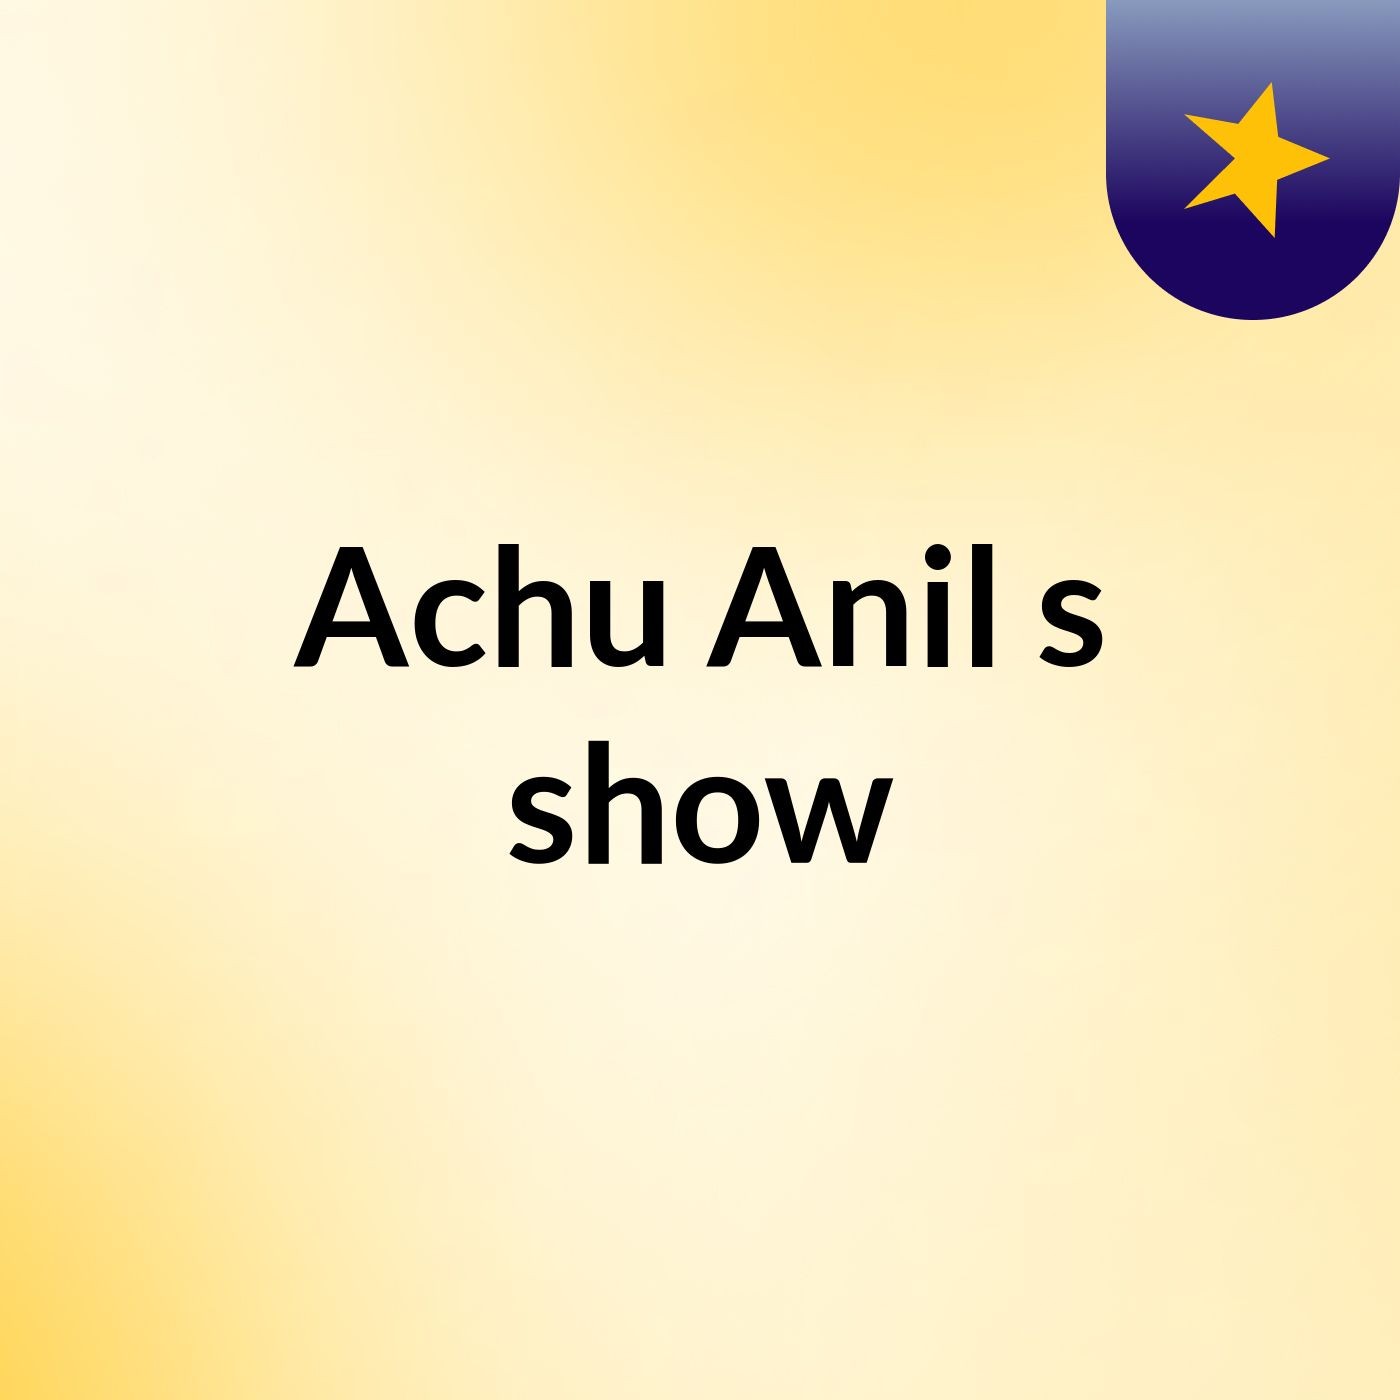 Achu Anil's show